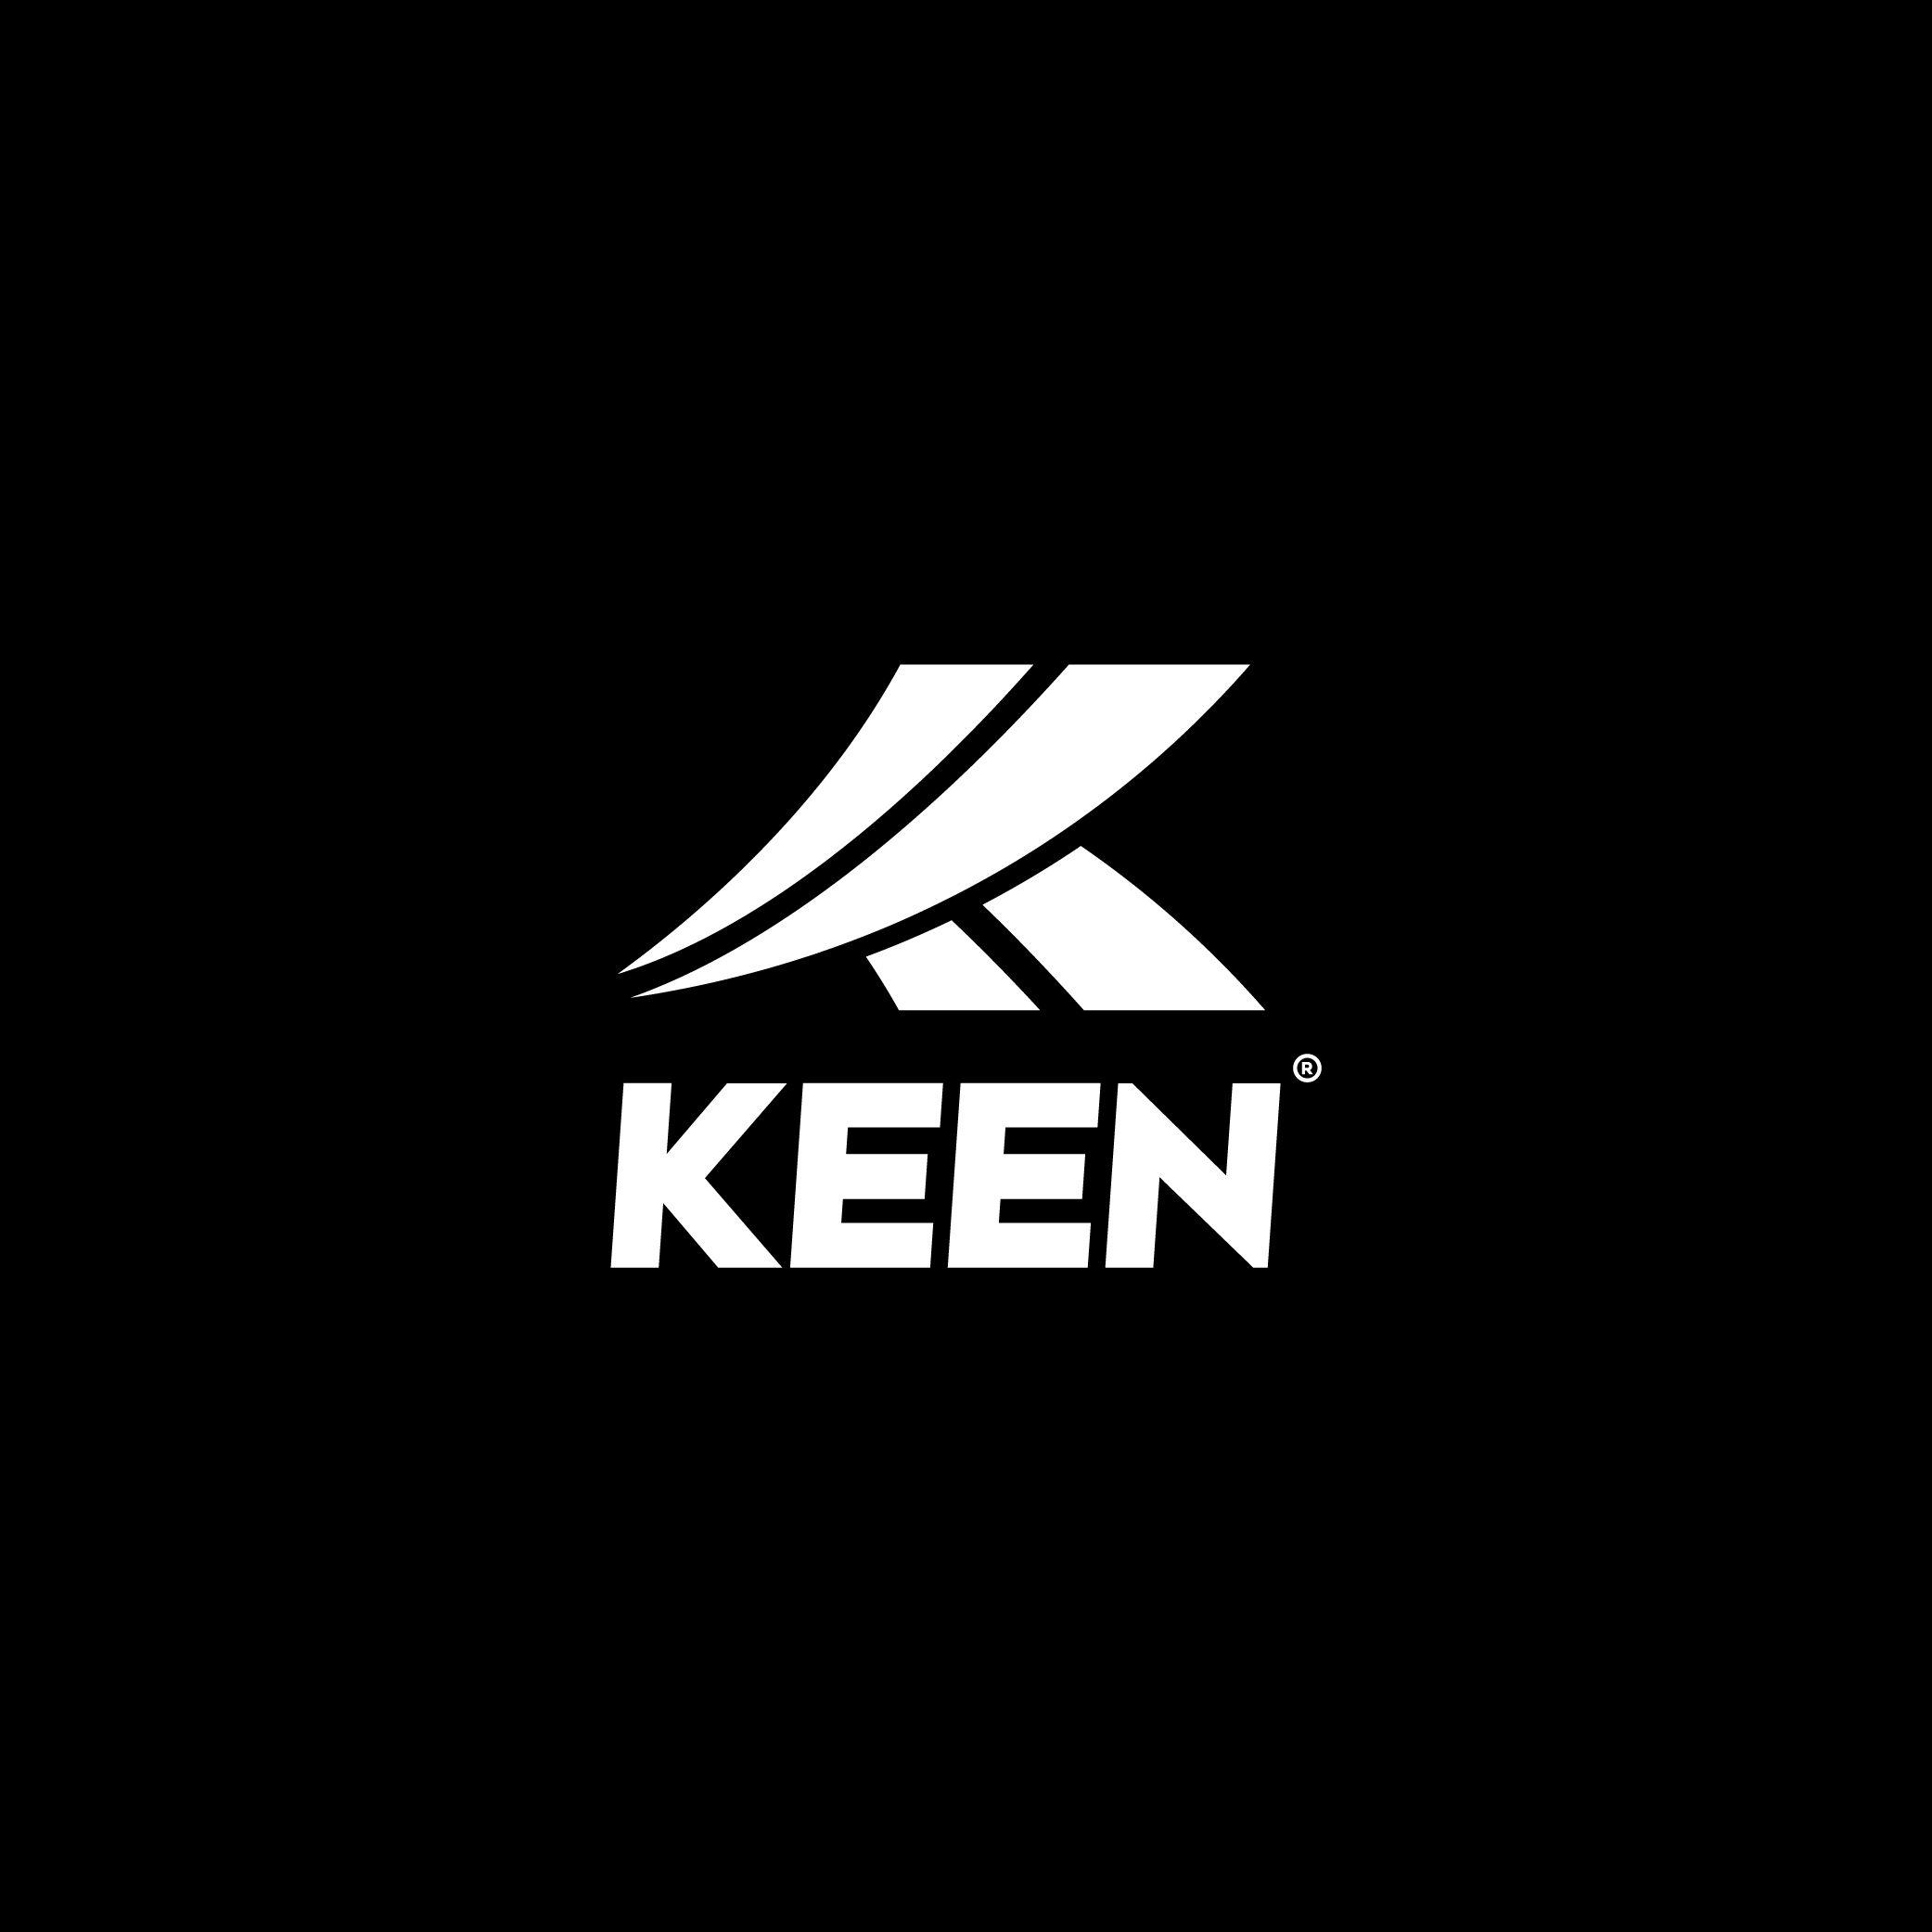 Keen Logo - KEEN LOGO DESIGN – High Quality Graphic Design & Services